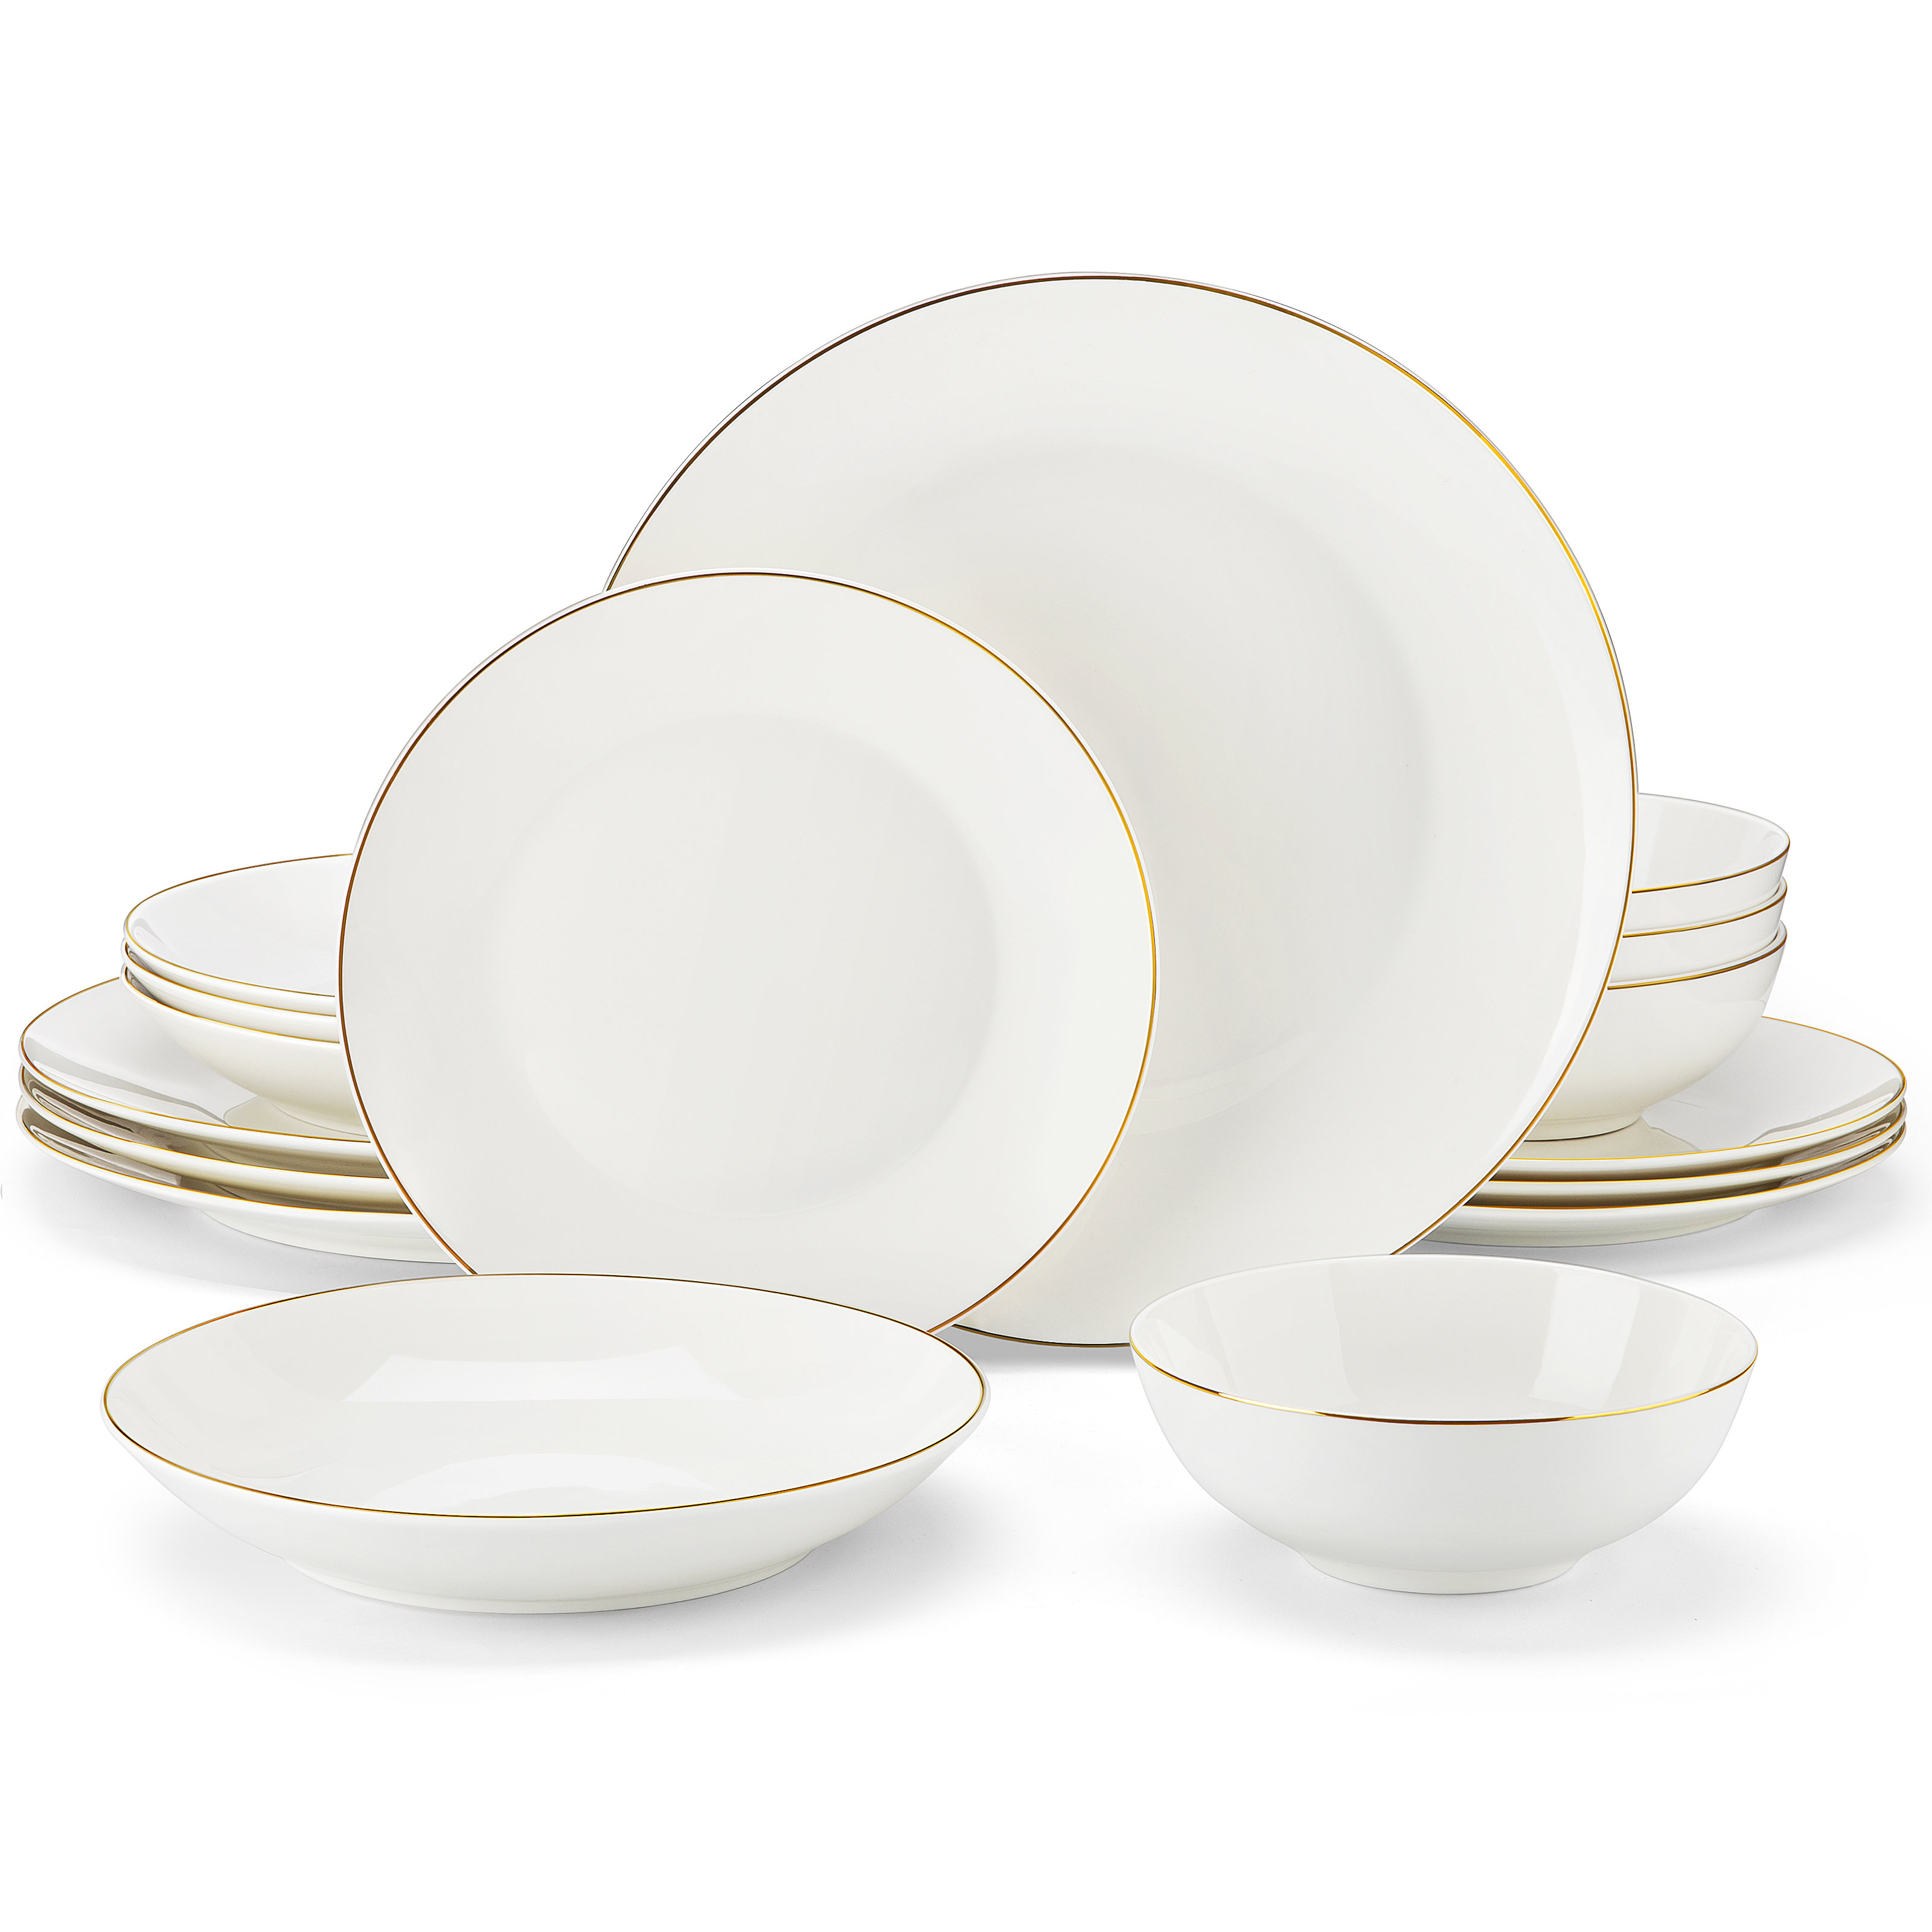 Luxury Bone China Tableware Set, White and Black Porcelain Kitchen